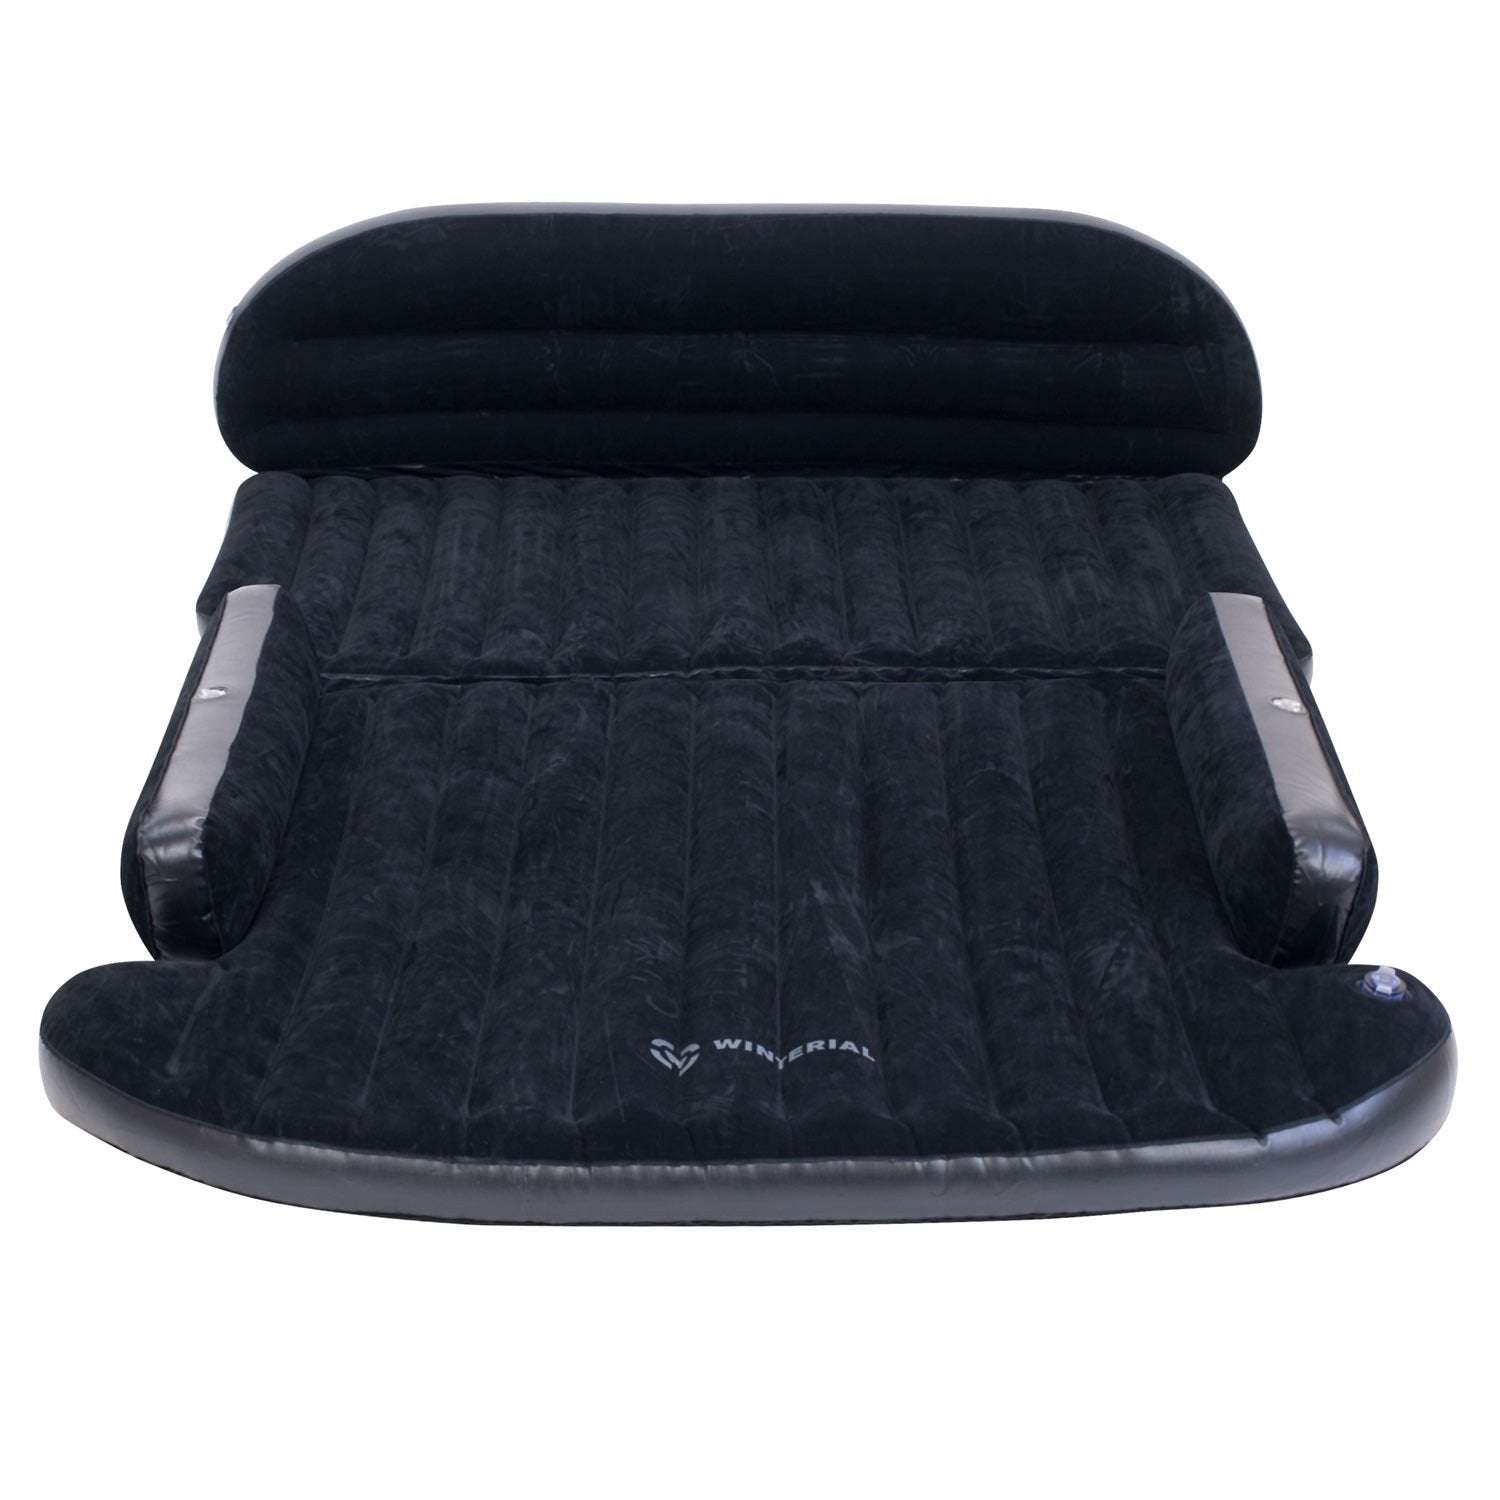 Self-Inflating Stadium Seat Cushion, Inflatable Bleacher Chair Seat Pads Mat